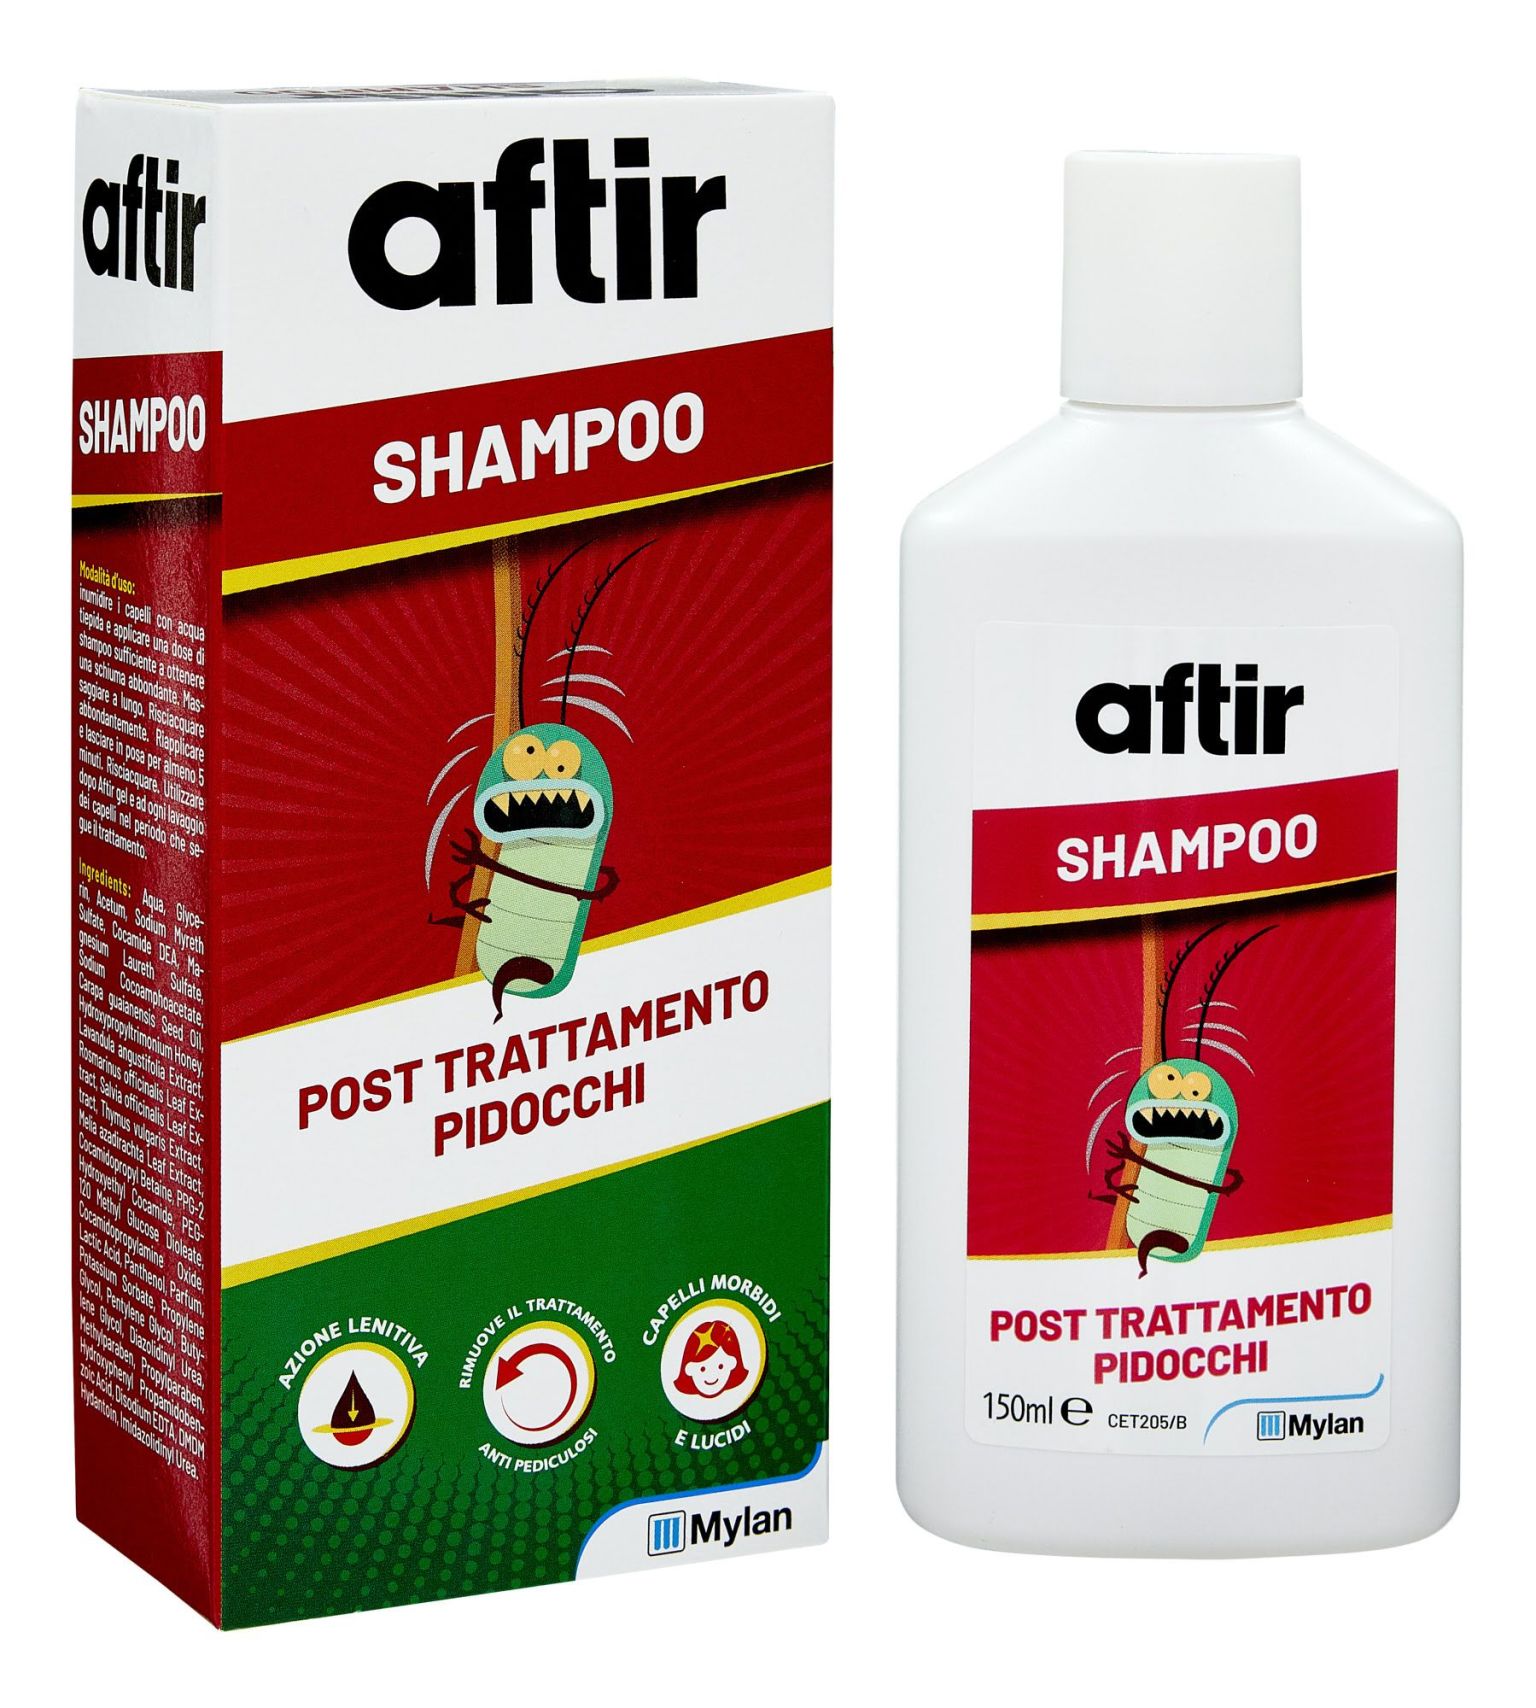 905353645 - Aftir Shampoo post trattamento pidocchi 150ml - 7867780_2.jpg